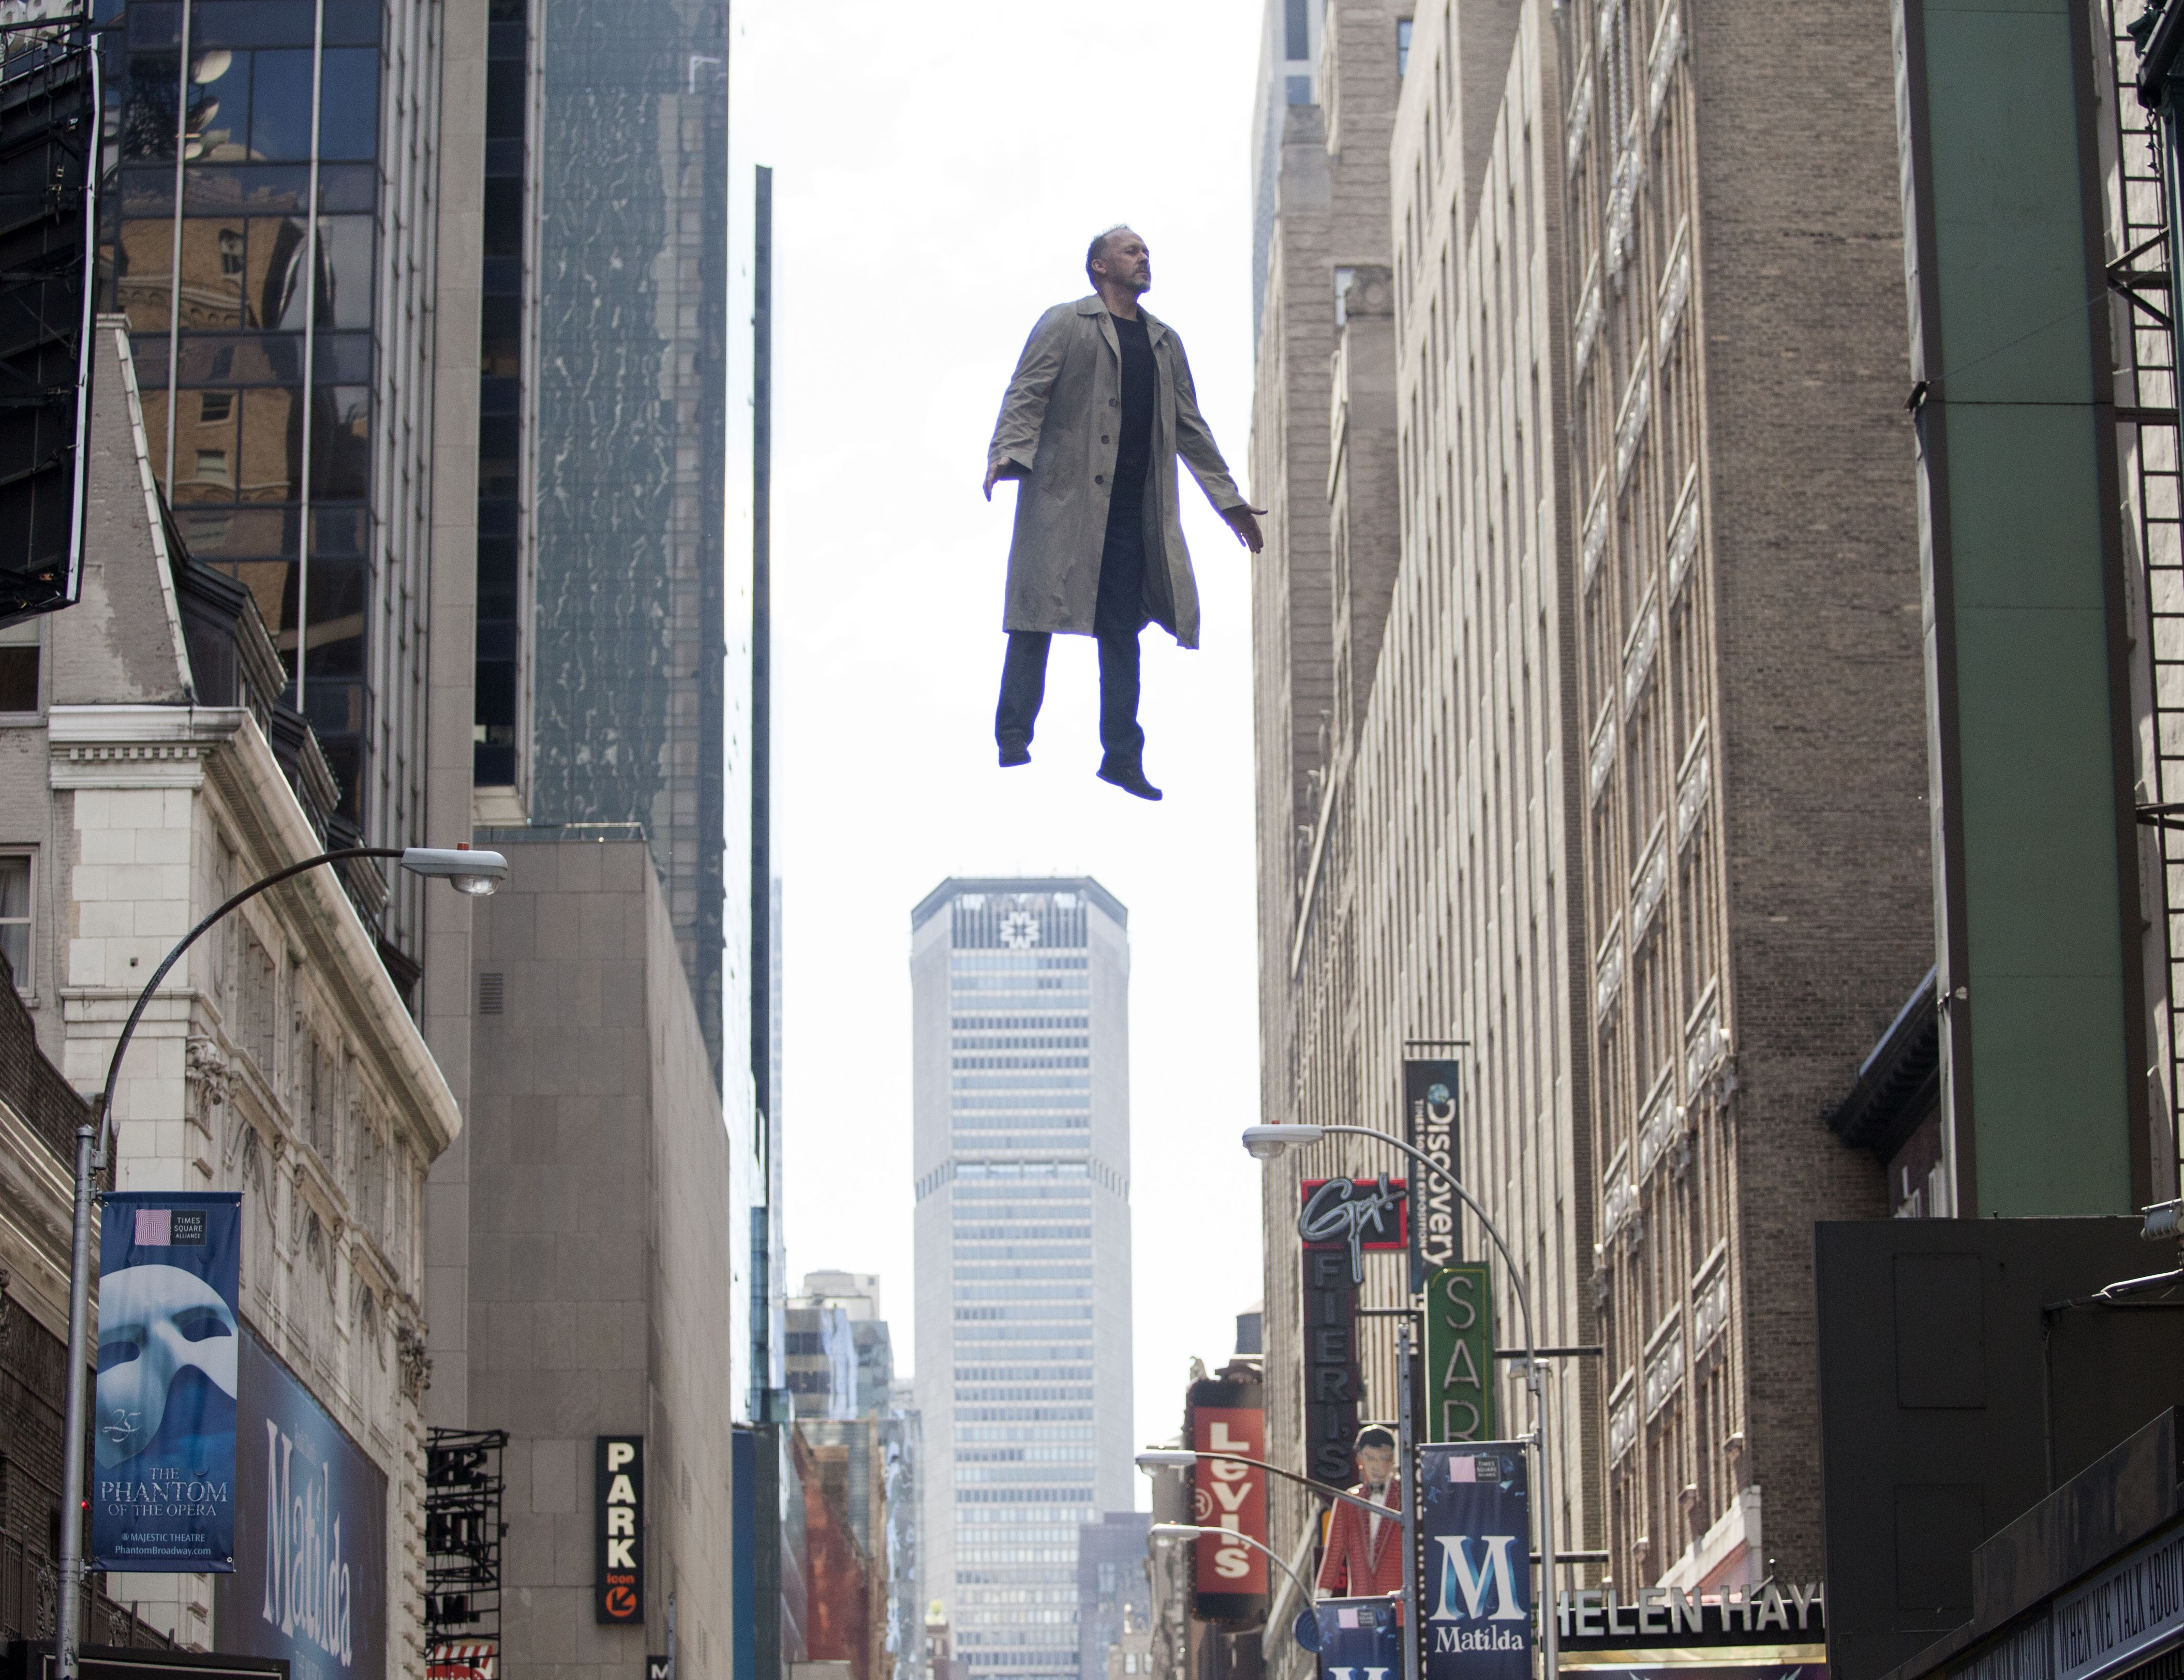 Michael Keaton flies in Birdman